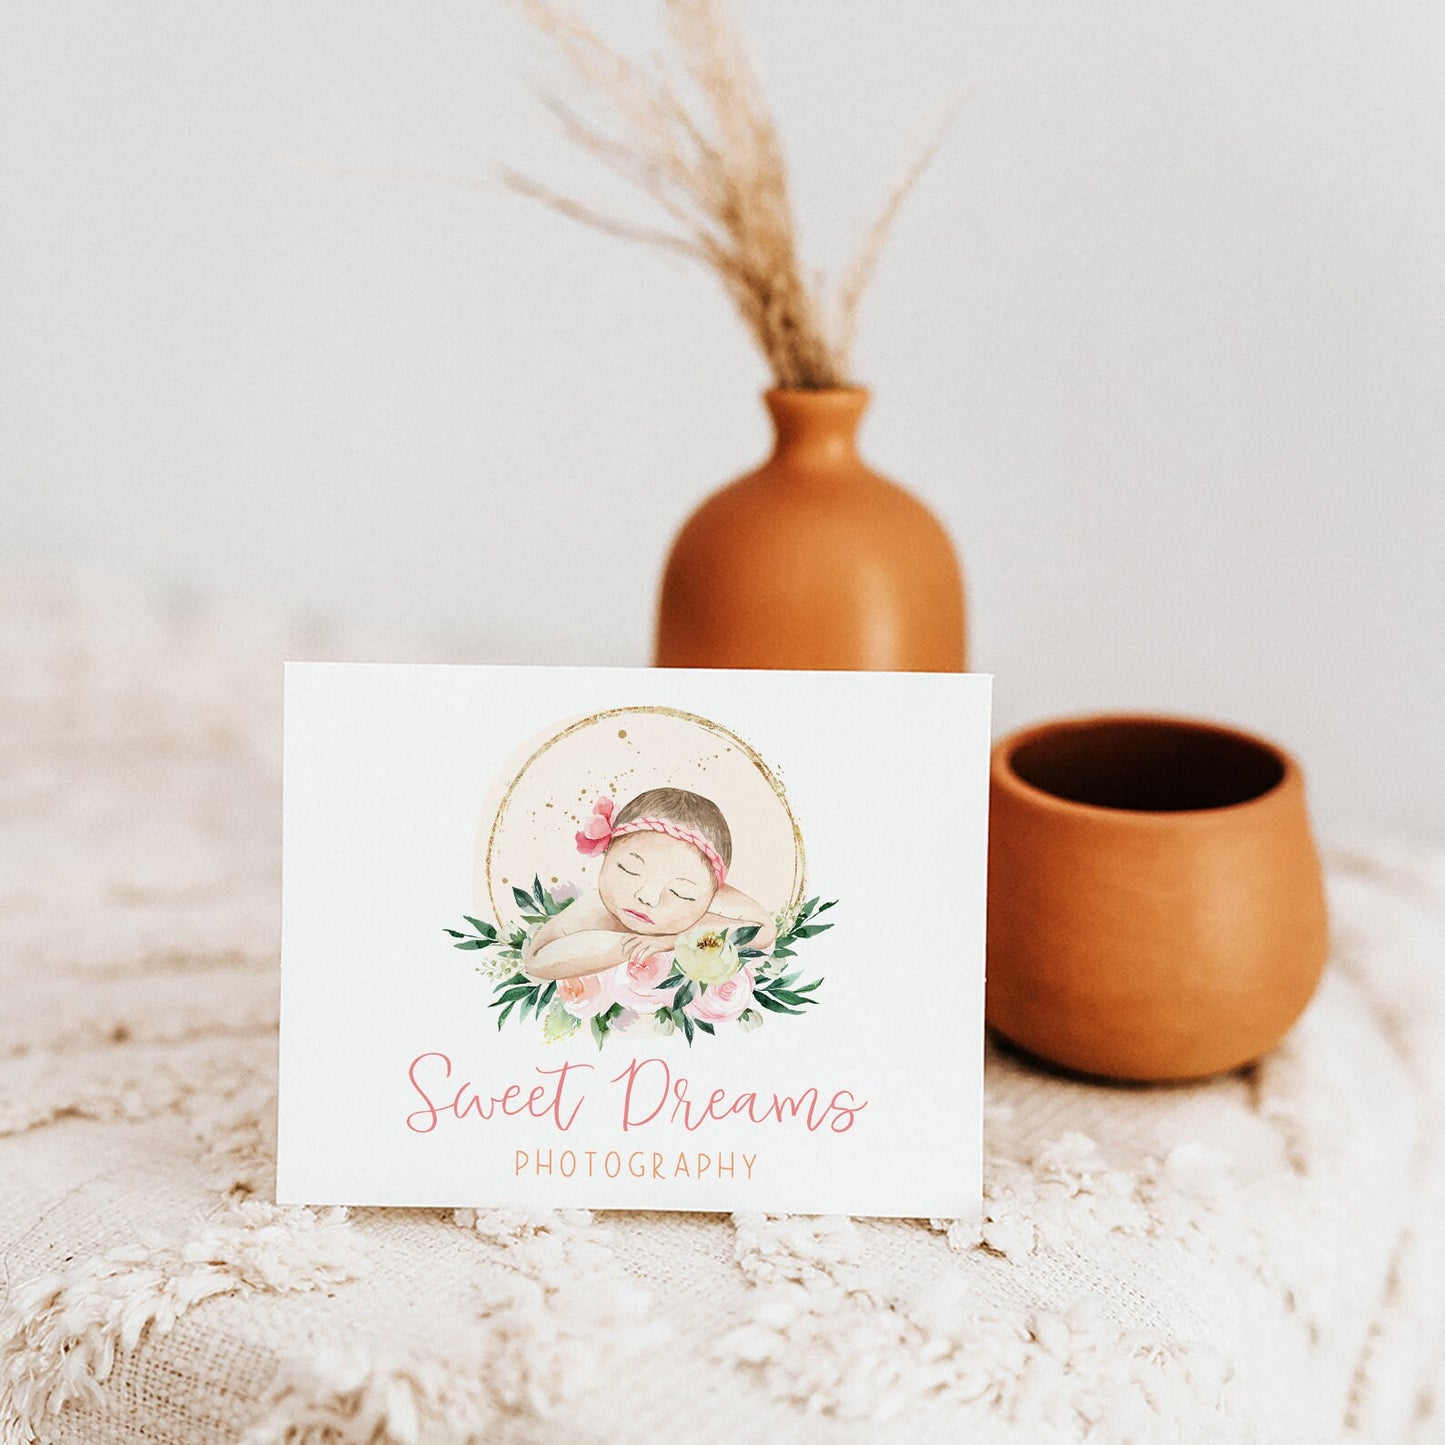 Sweet Dreams | Premade Logo Design | Baby, Doula, Midwife